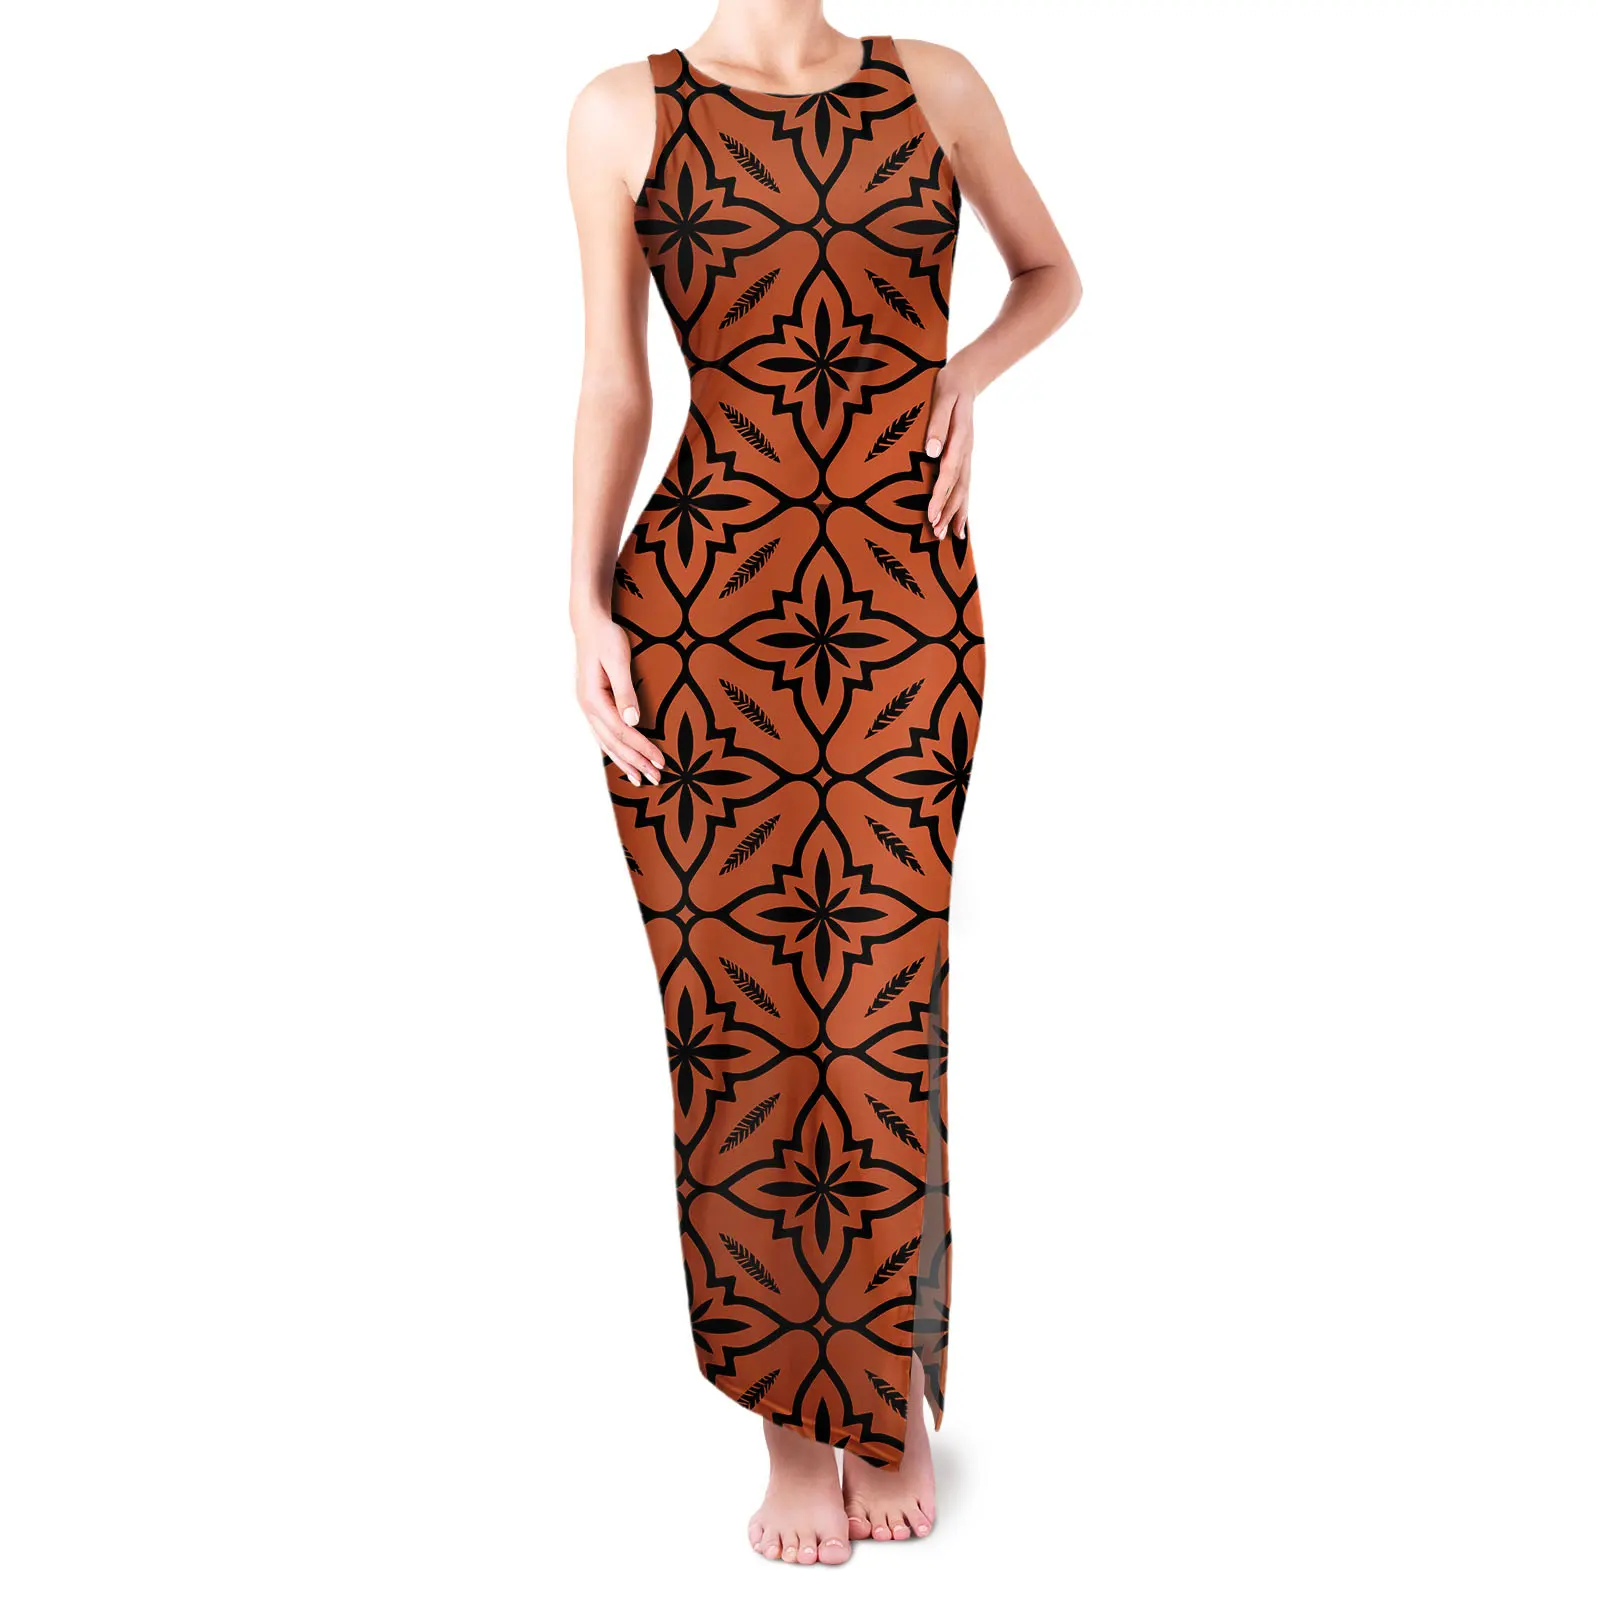 Orange Tribal Printed Lady Clothing Designer Tank Top Dresses Polynesian Samoa Casual Oversized Women Sleeveless Dress For Daily